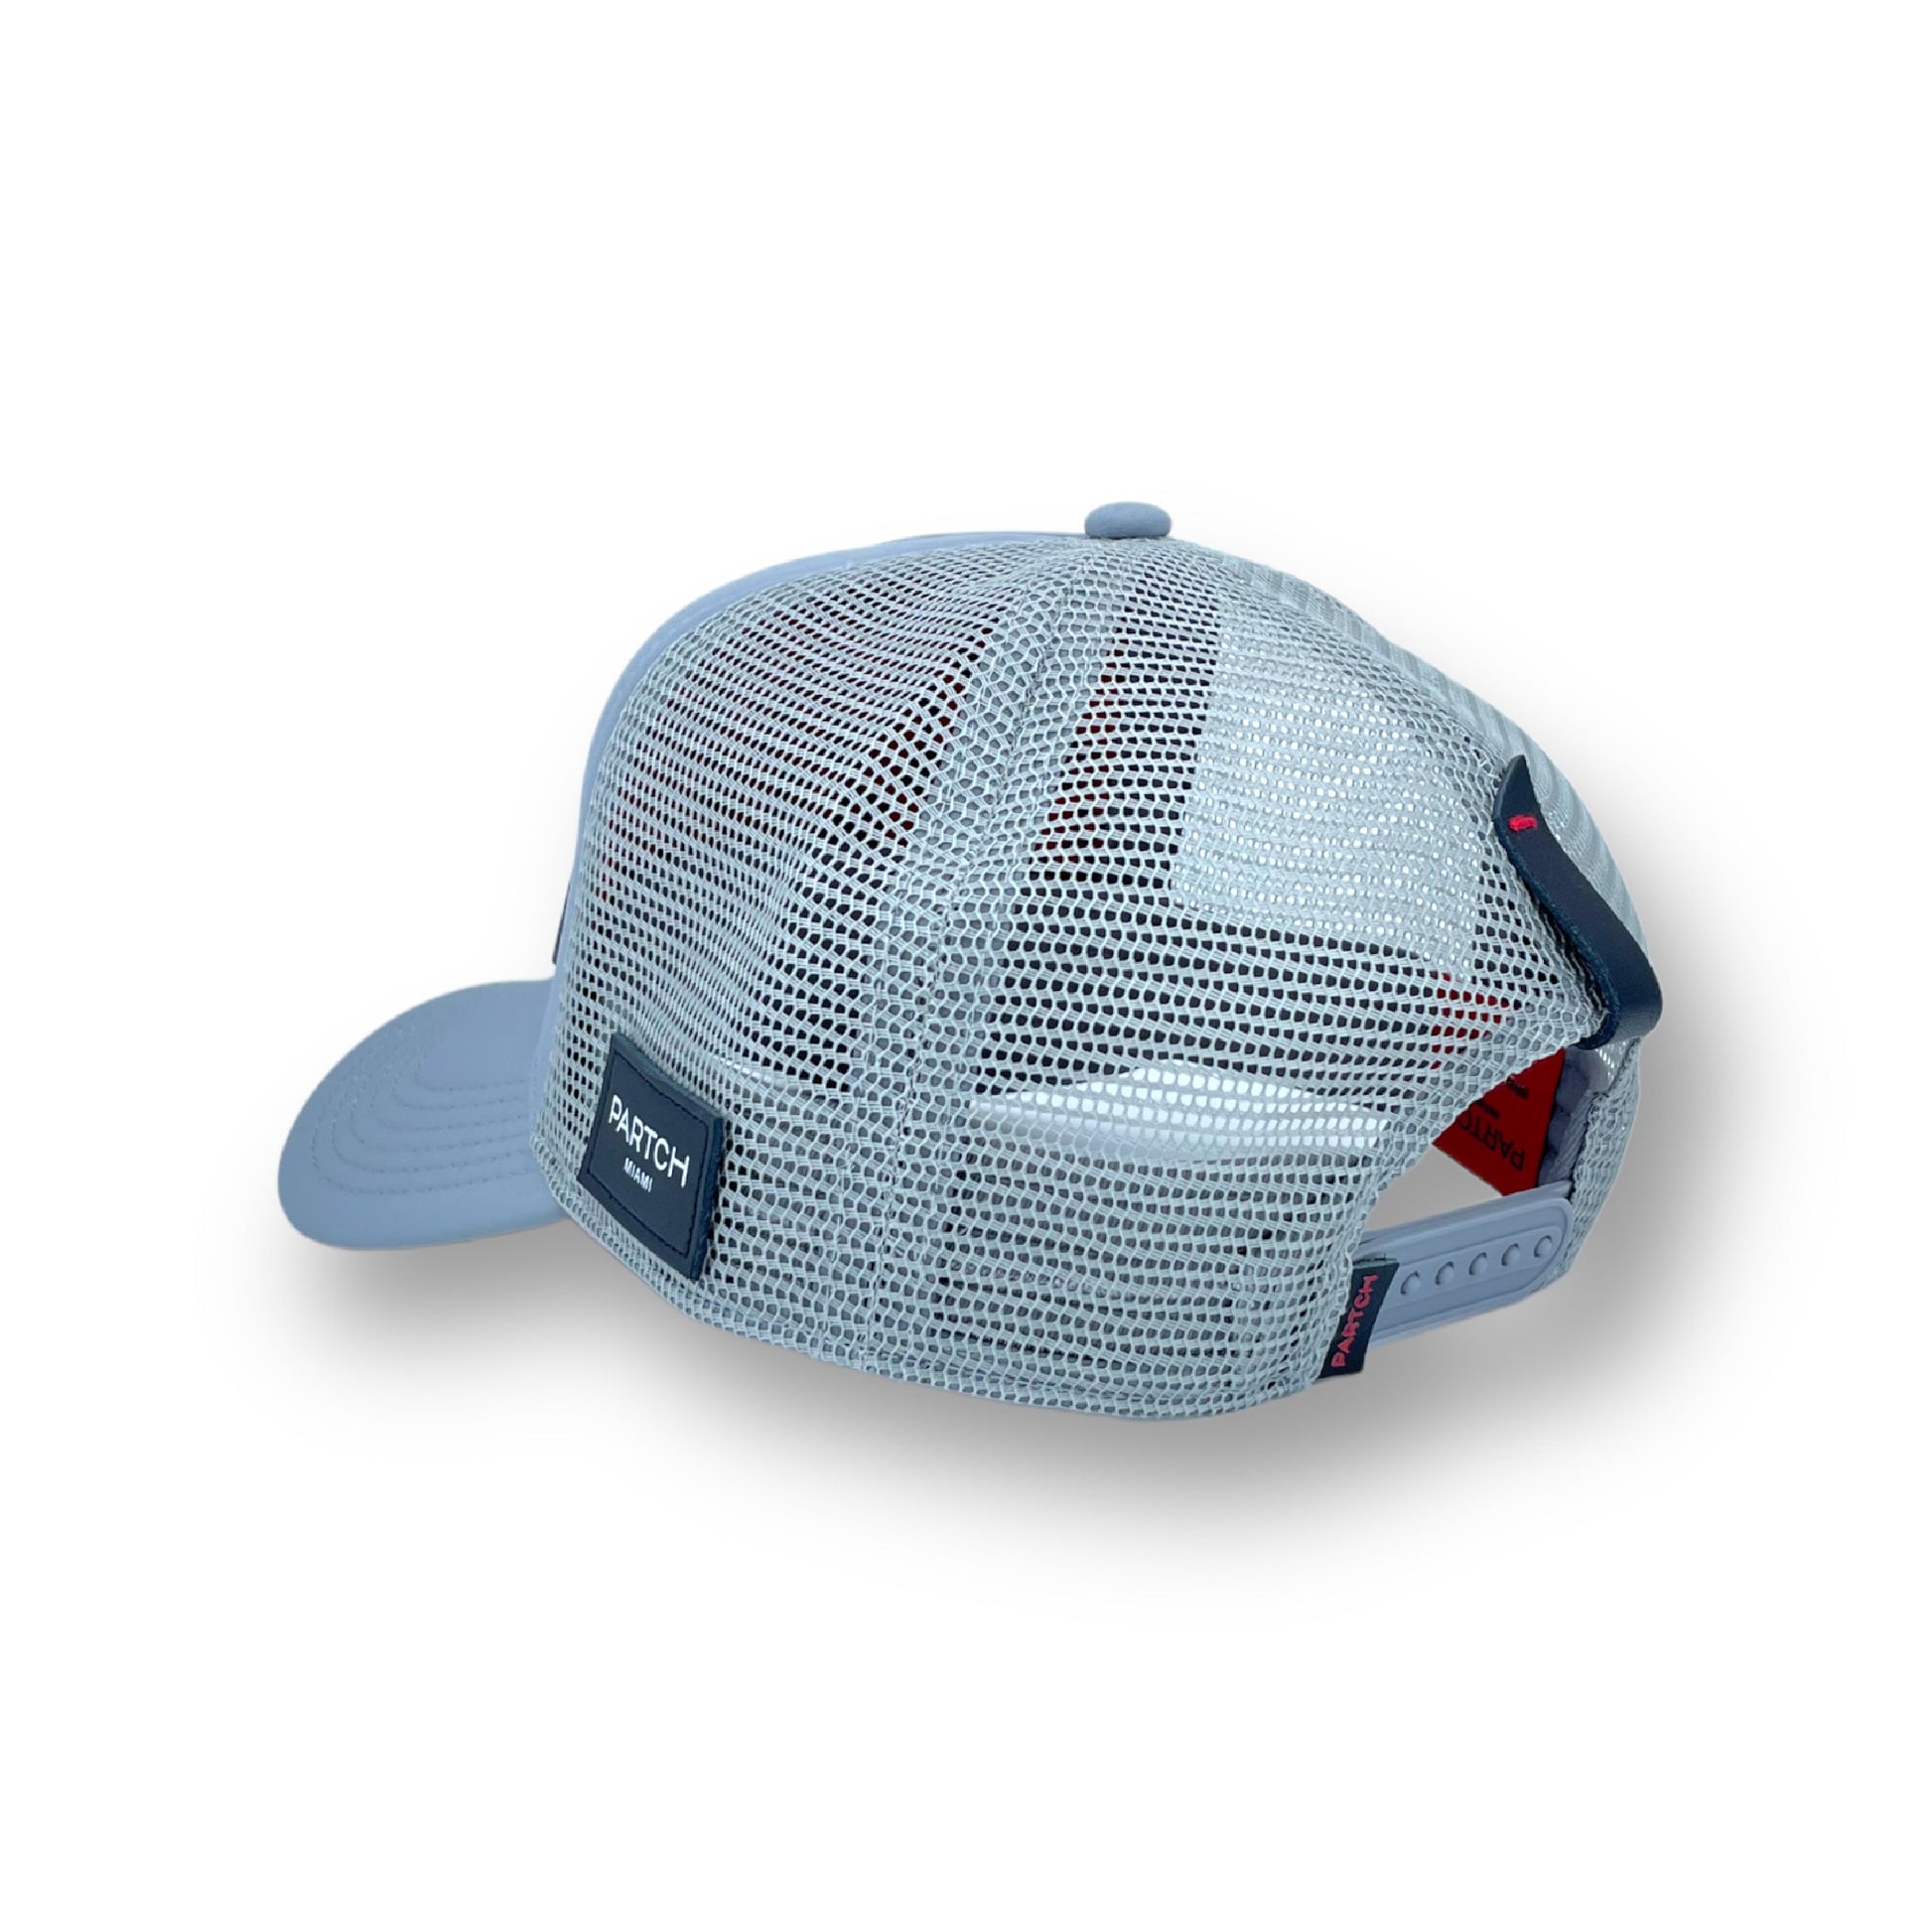 Partch Grey Trucker Hats Mesh Cap Art Exsyt Patch Removable Baseball Cap Hats for Men and Women Gray